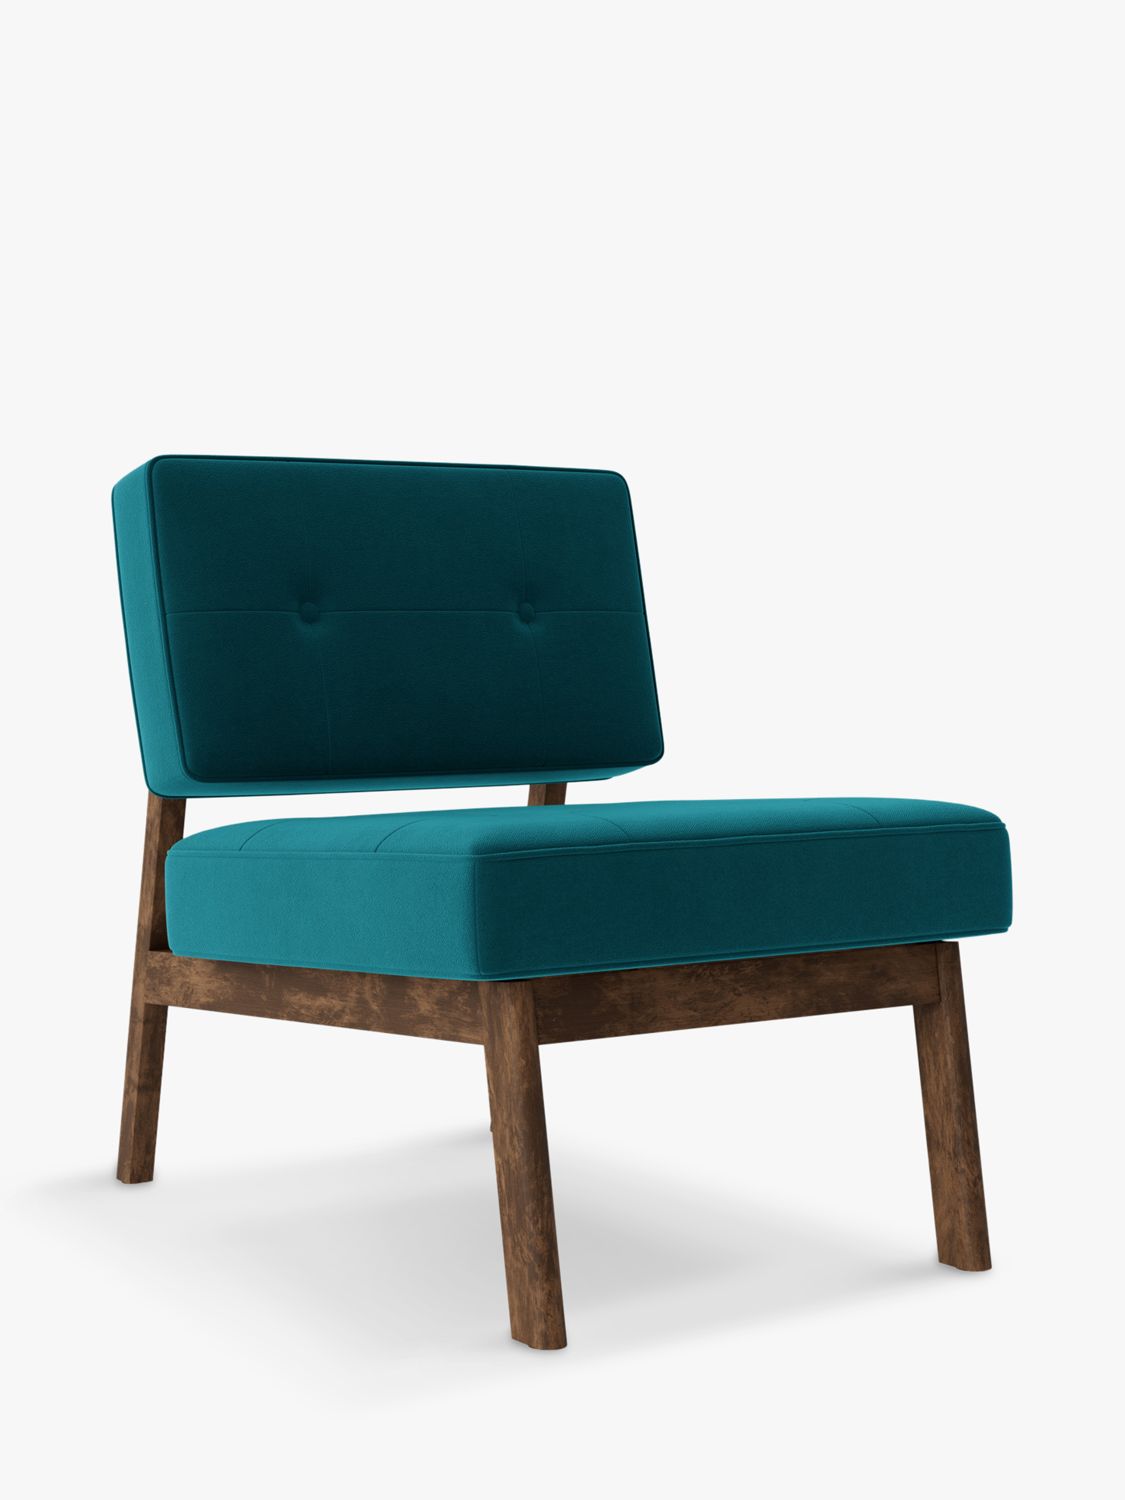 Swoon Aron Chair, Dark Leg